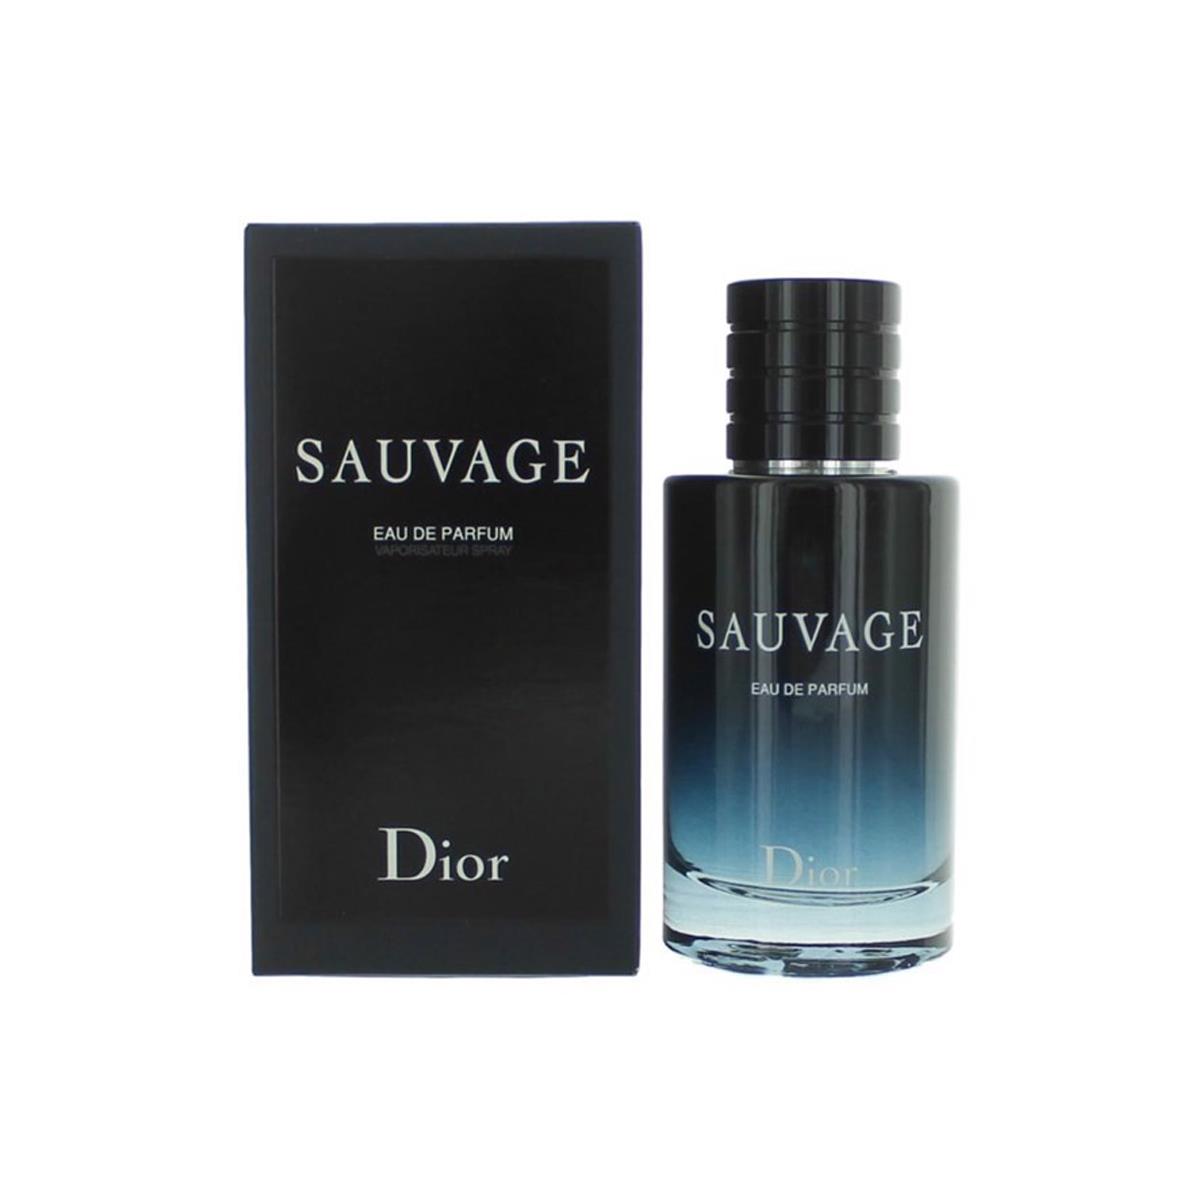 Nước hoa nam Sauvage Dior Elixir EDP của hãng Christian Dior